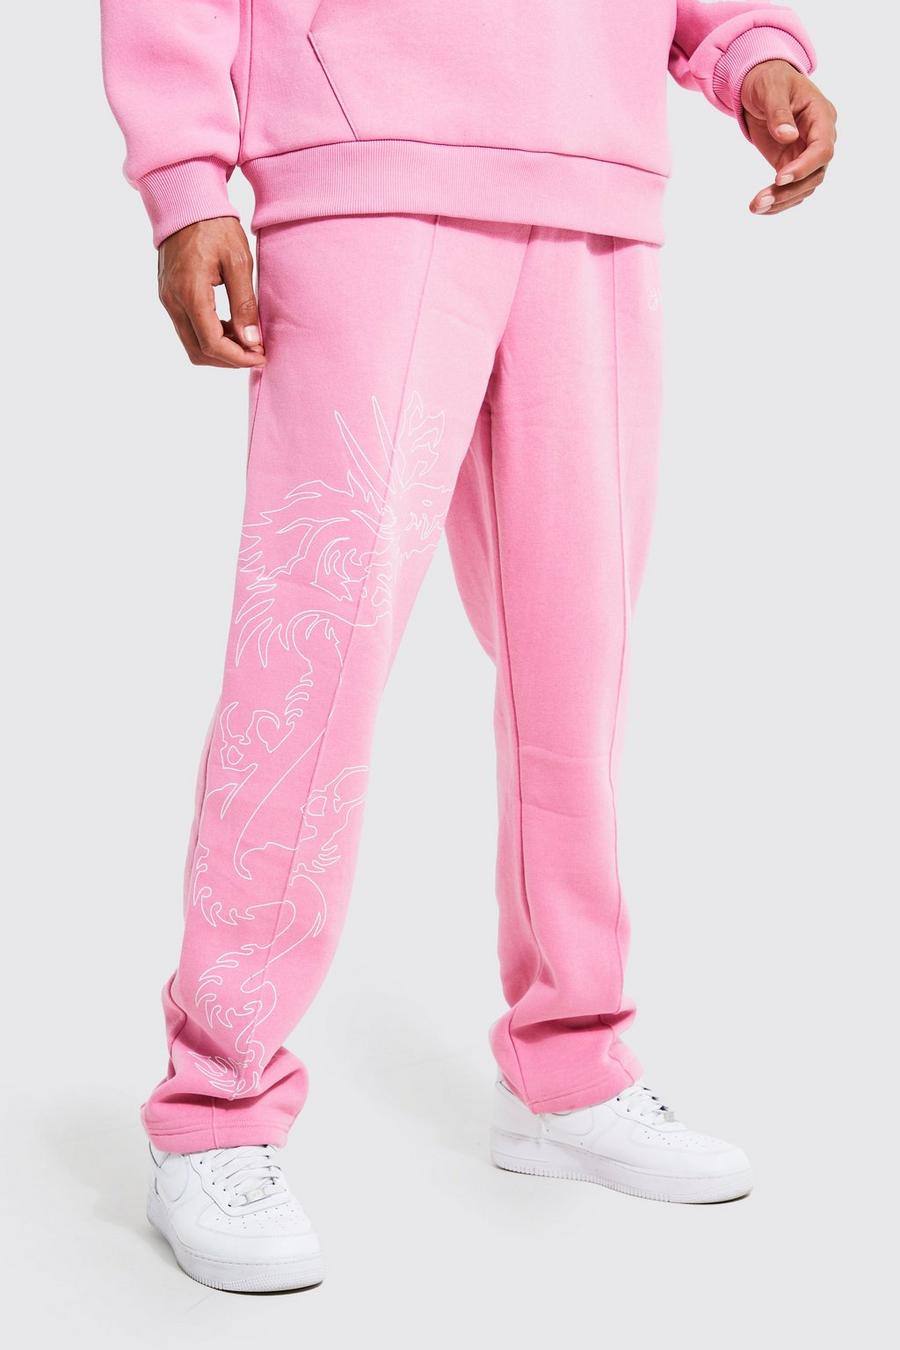 Tall lockere Jogginghose mit Drachen-Print, Pink rose